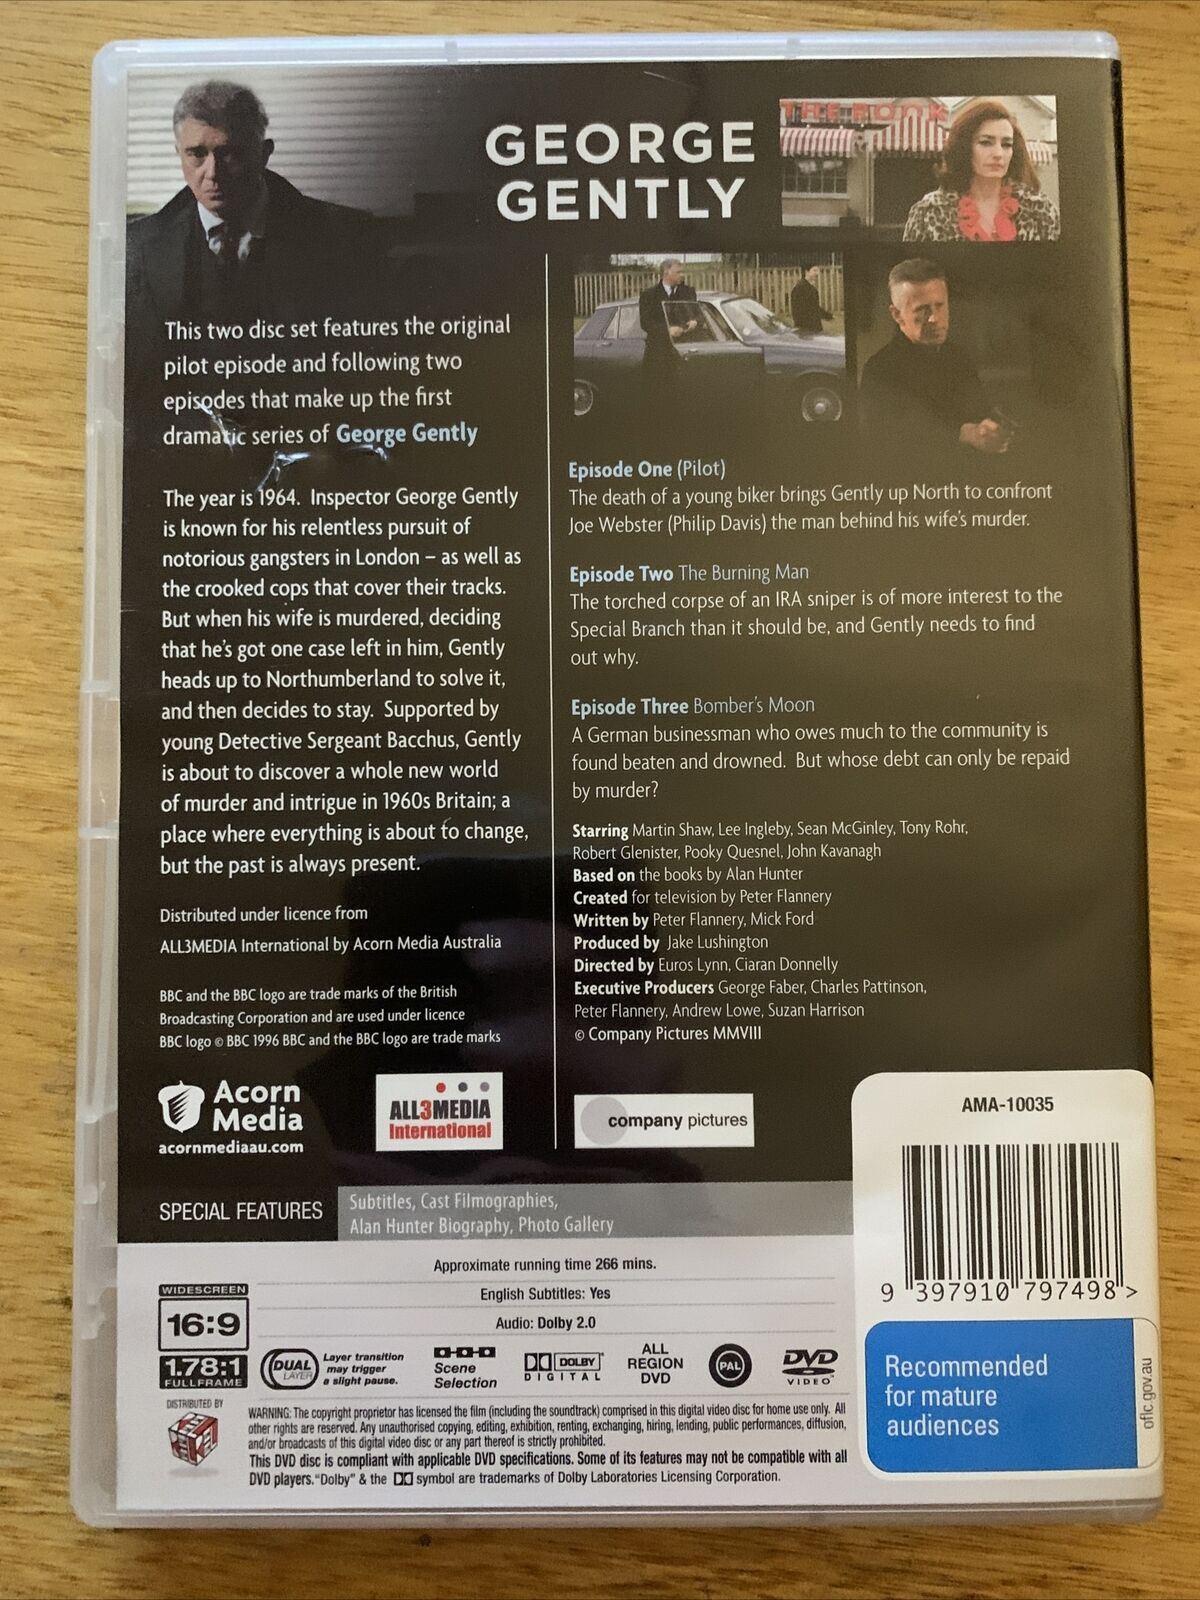 George Gently : Series 1 (DVD, 2007) Tony Rohr, Martin Shaw, Sean McGinley